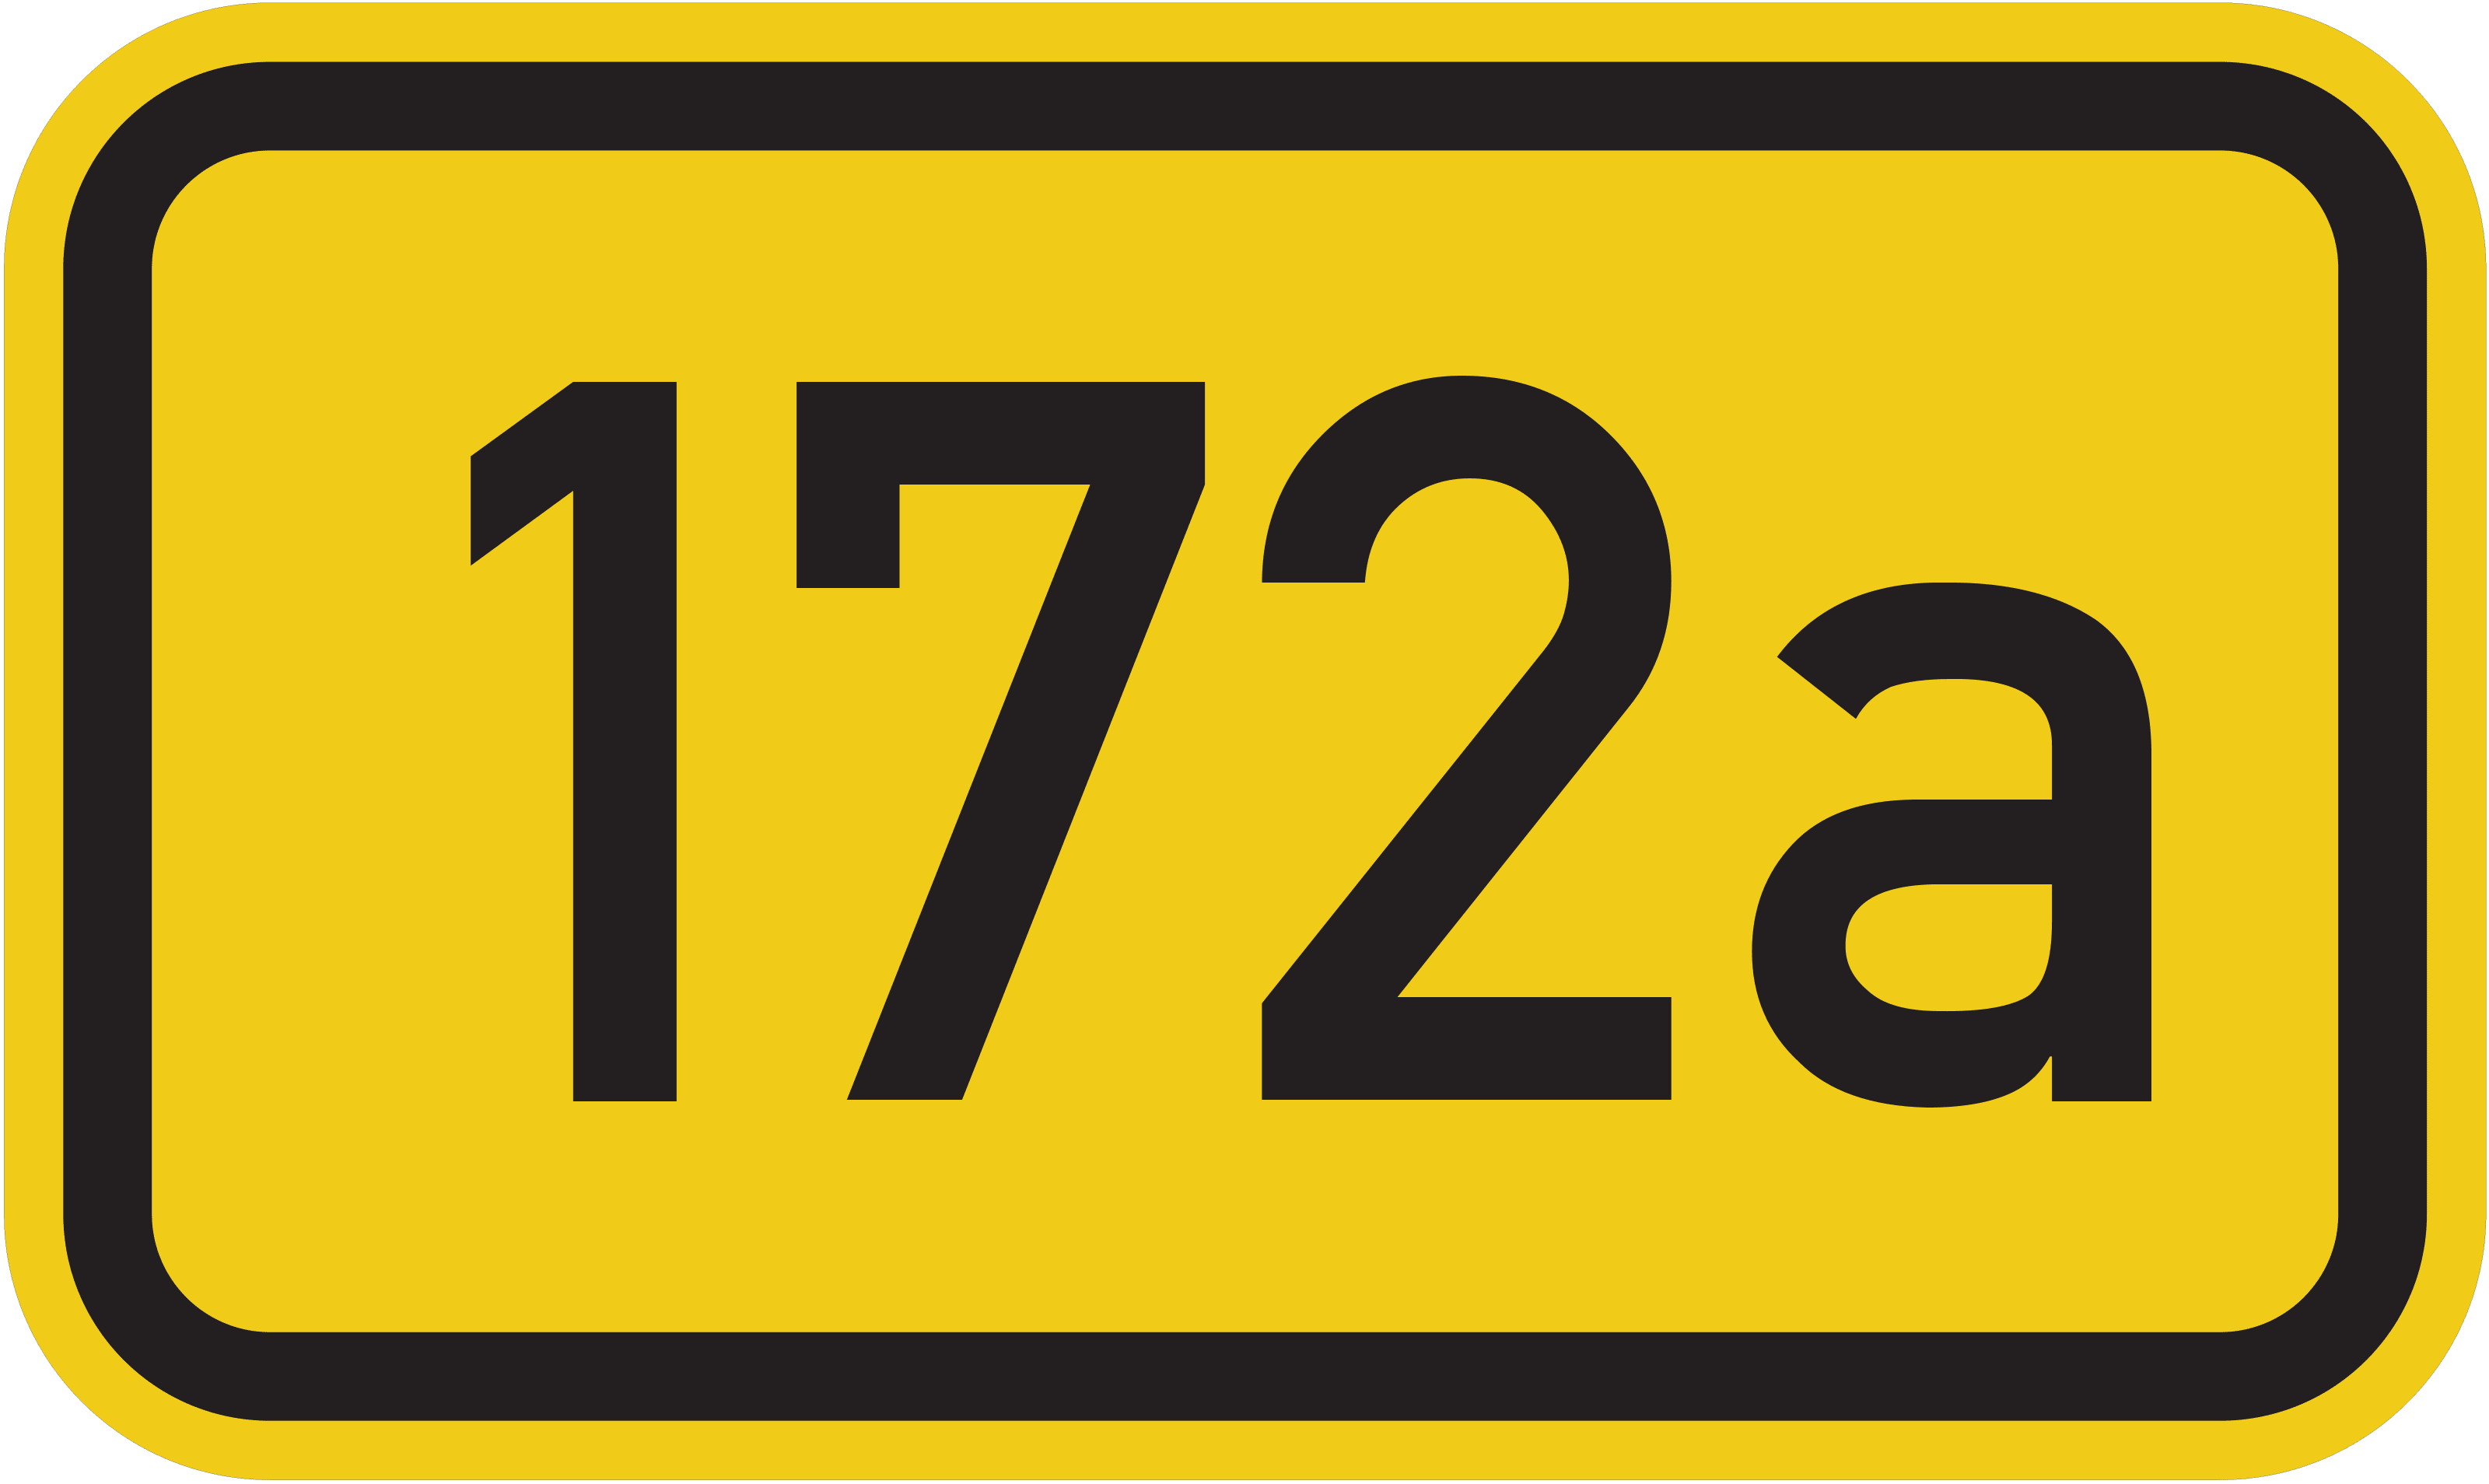 Straßenschild Bundesstraße 172a